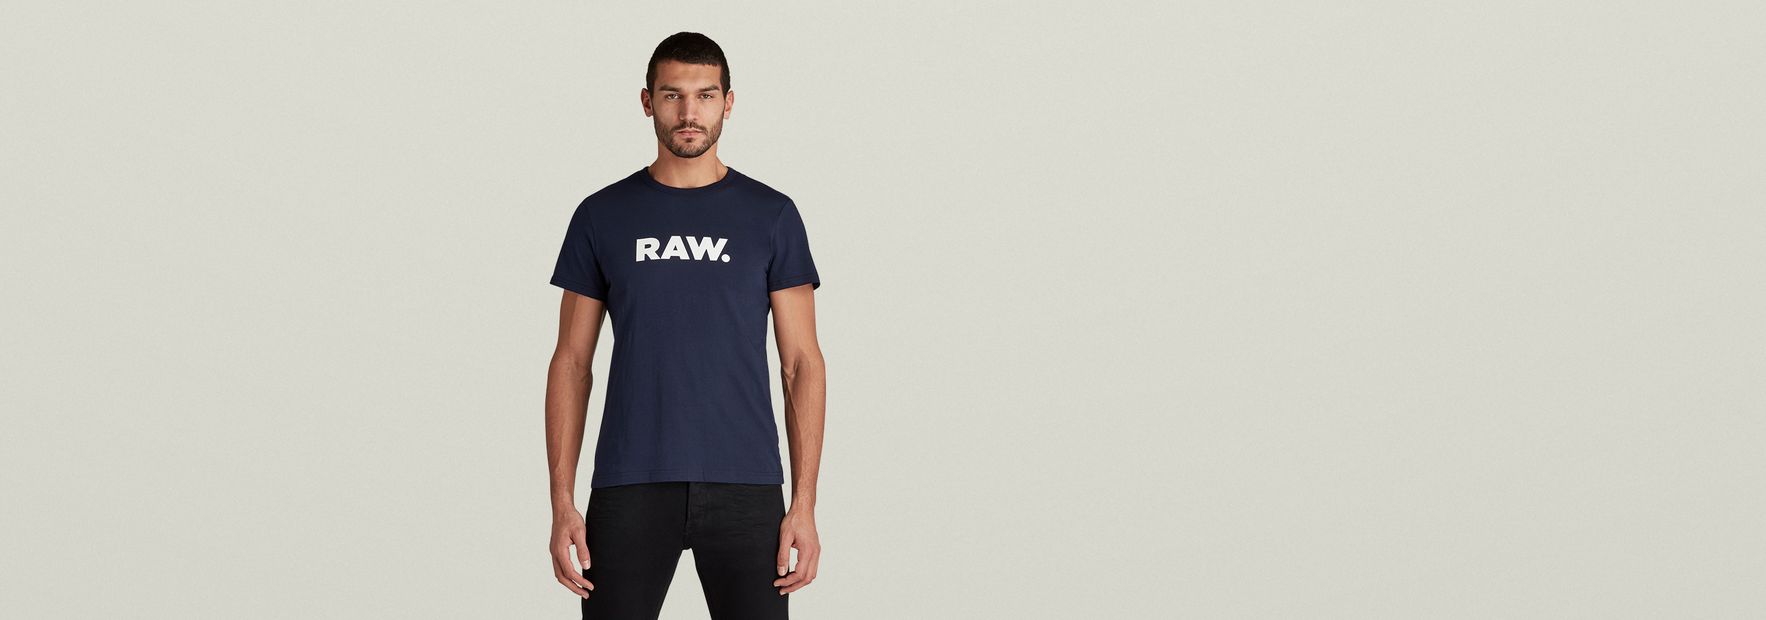  G-Star Raw Men's Holorn Graphic Crew Neck Short Sleeve